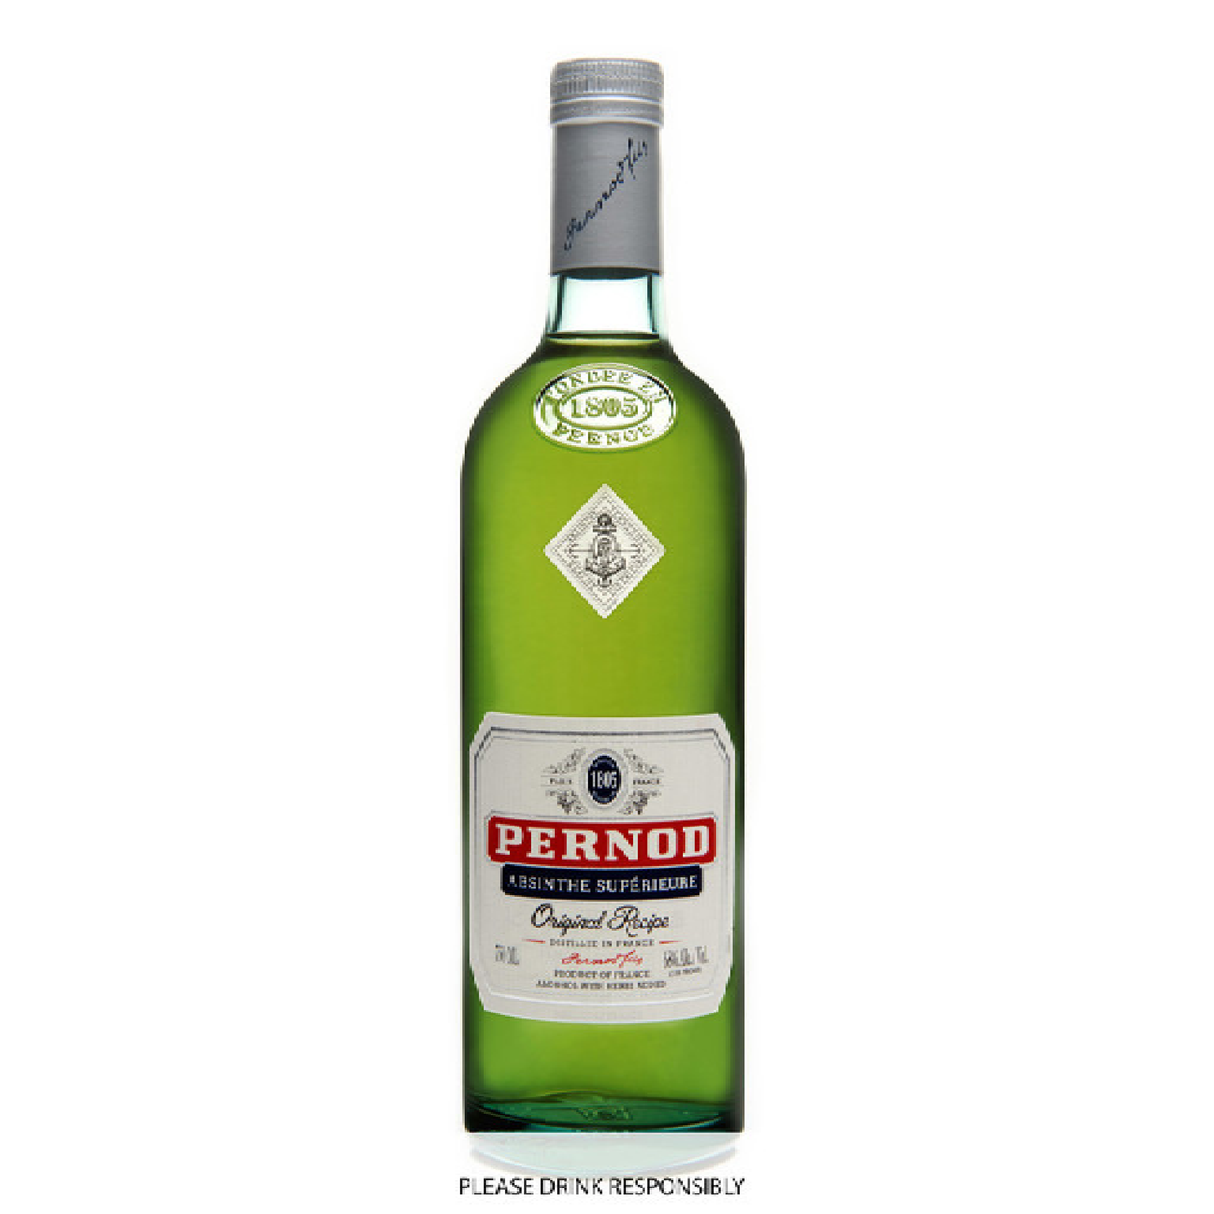 Pernod Absinthe Superieur The Original Recipe - Liquor Geeks